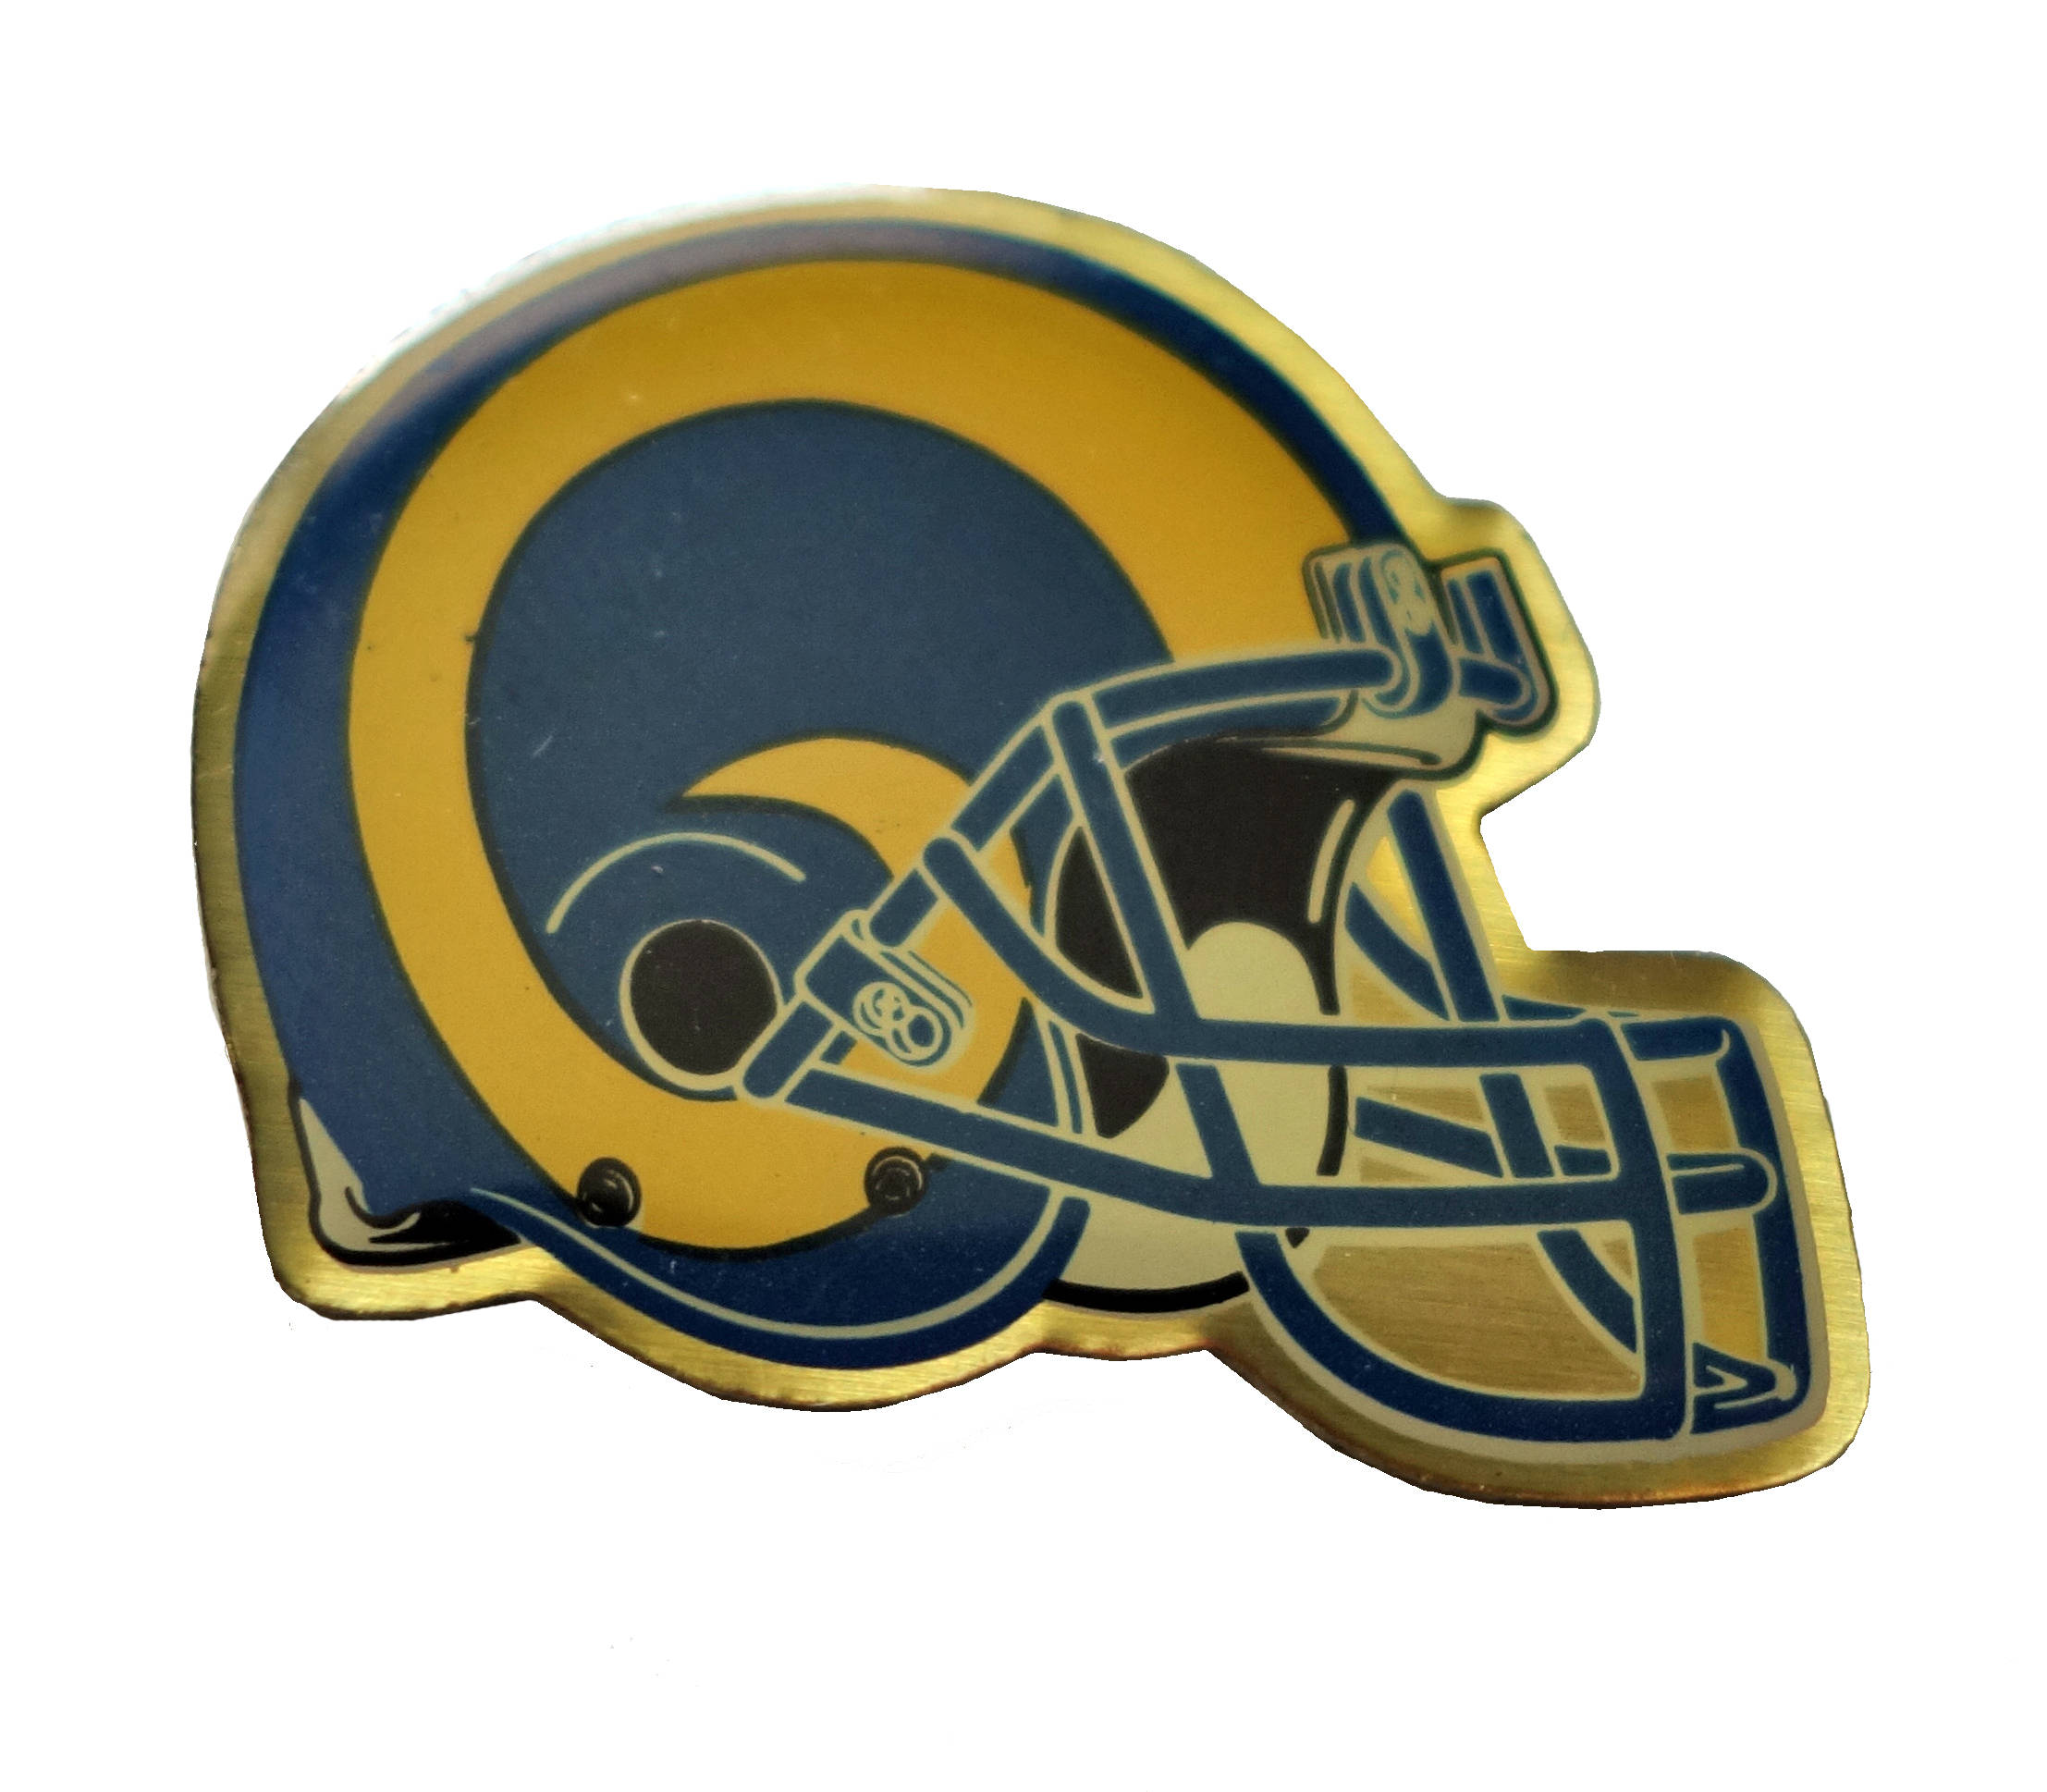 st Louis Rams Helmet Logo Vintage Enamel Pin Lapel Badge Brooch Gift Nfl Football Missouri